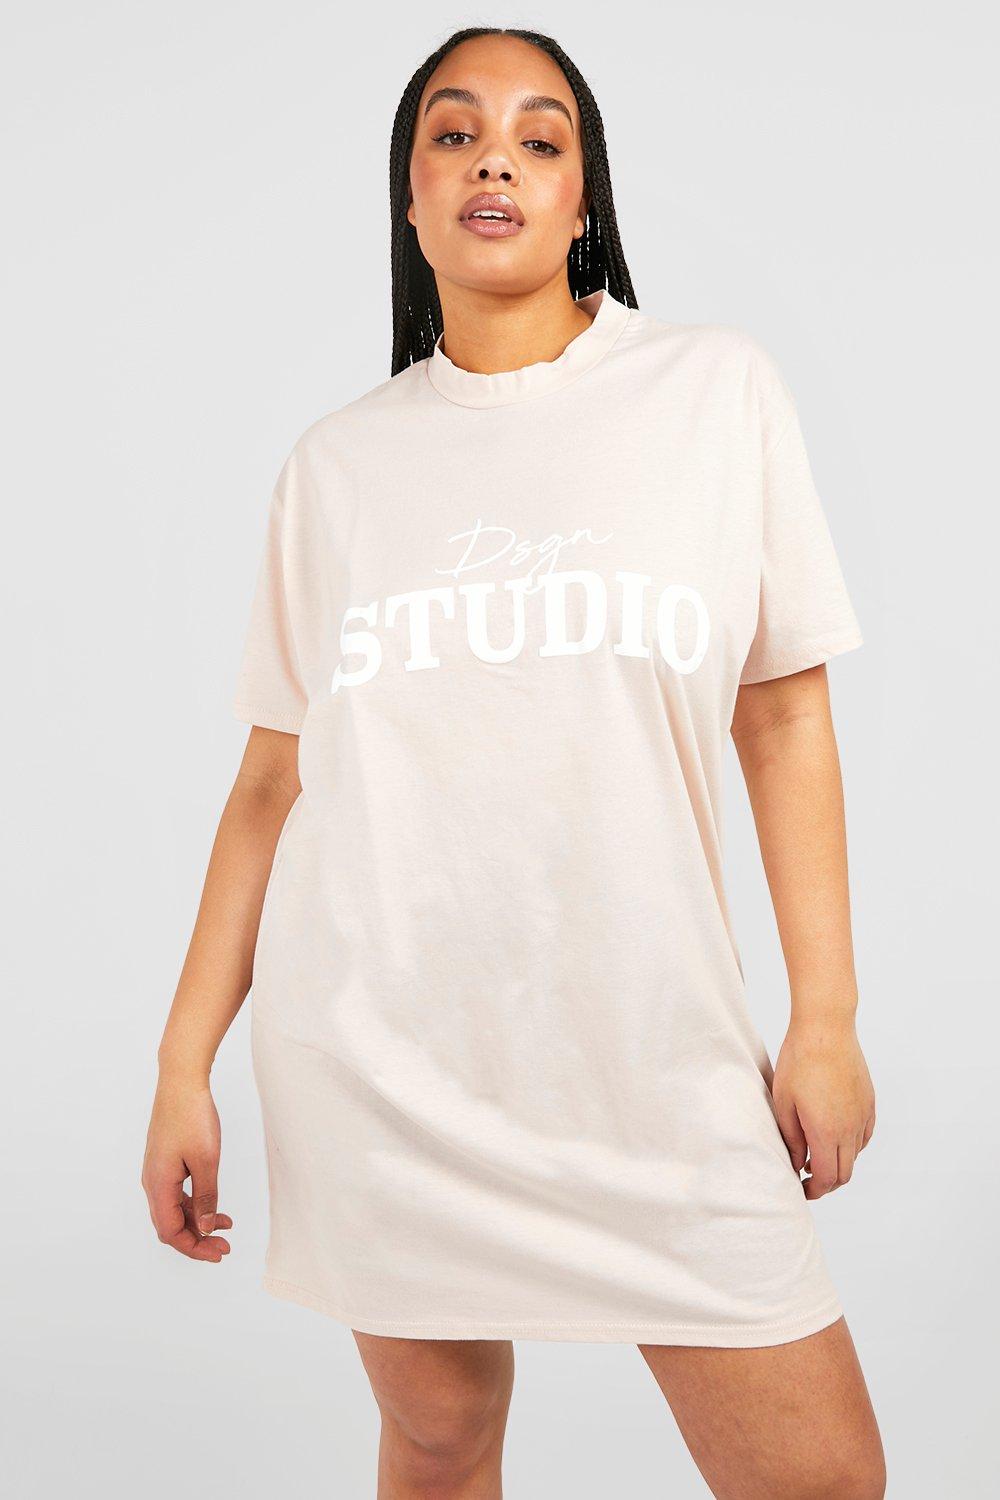 Plus Design Studio T-shirt Dress